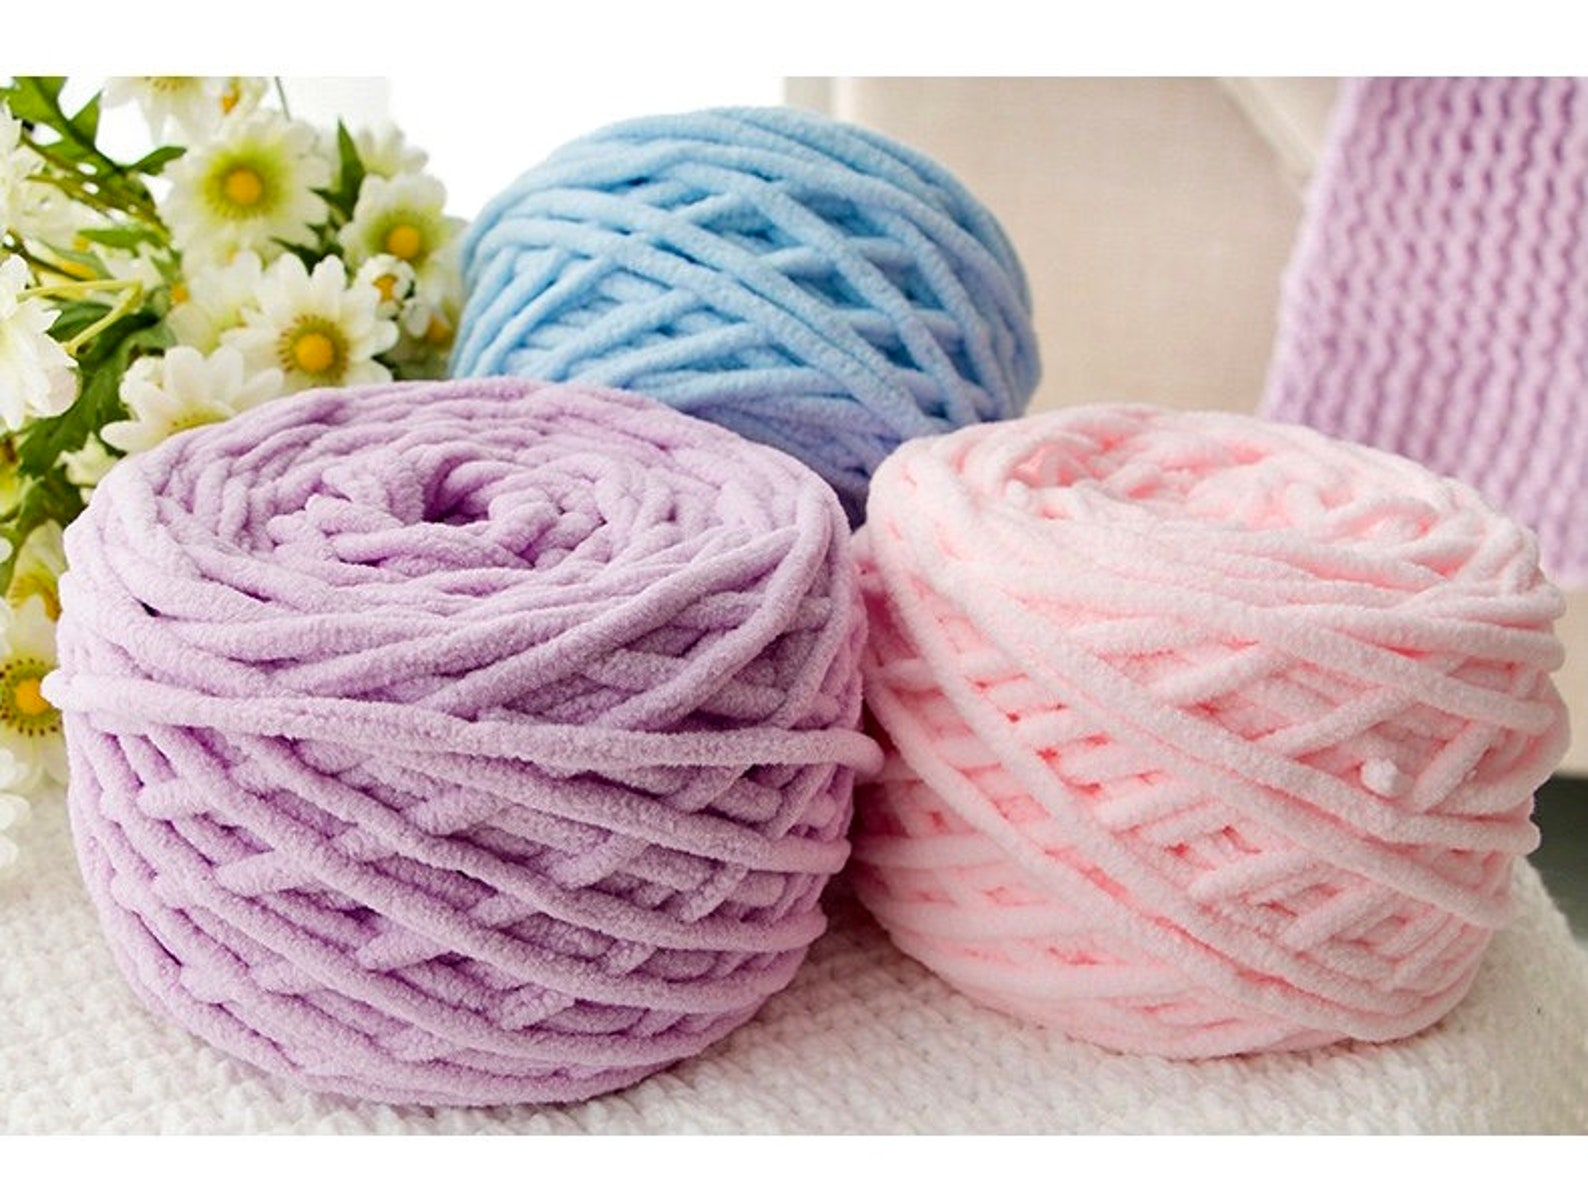 Chuncky Blanket Yarn for Crochet Amigurumi and Crafting - Etsy